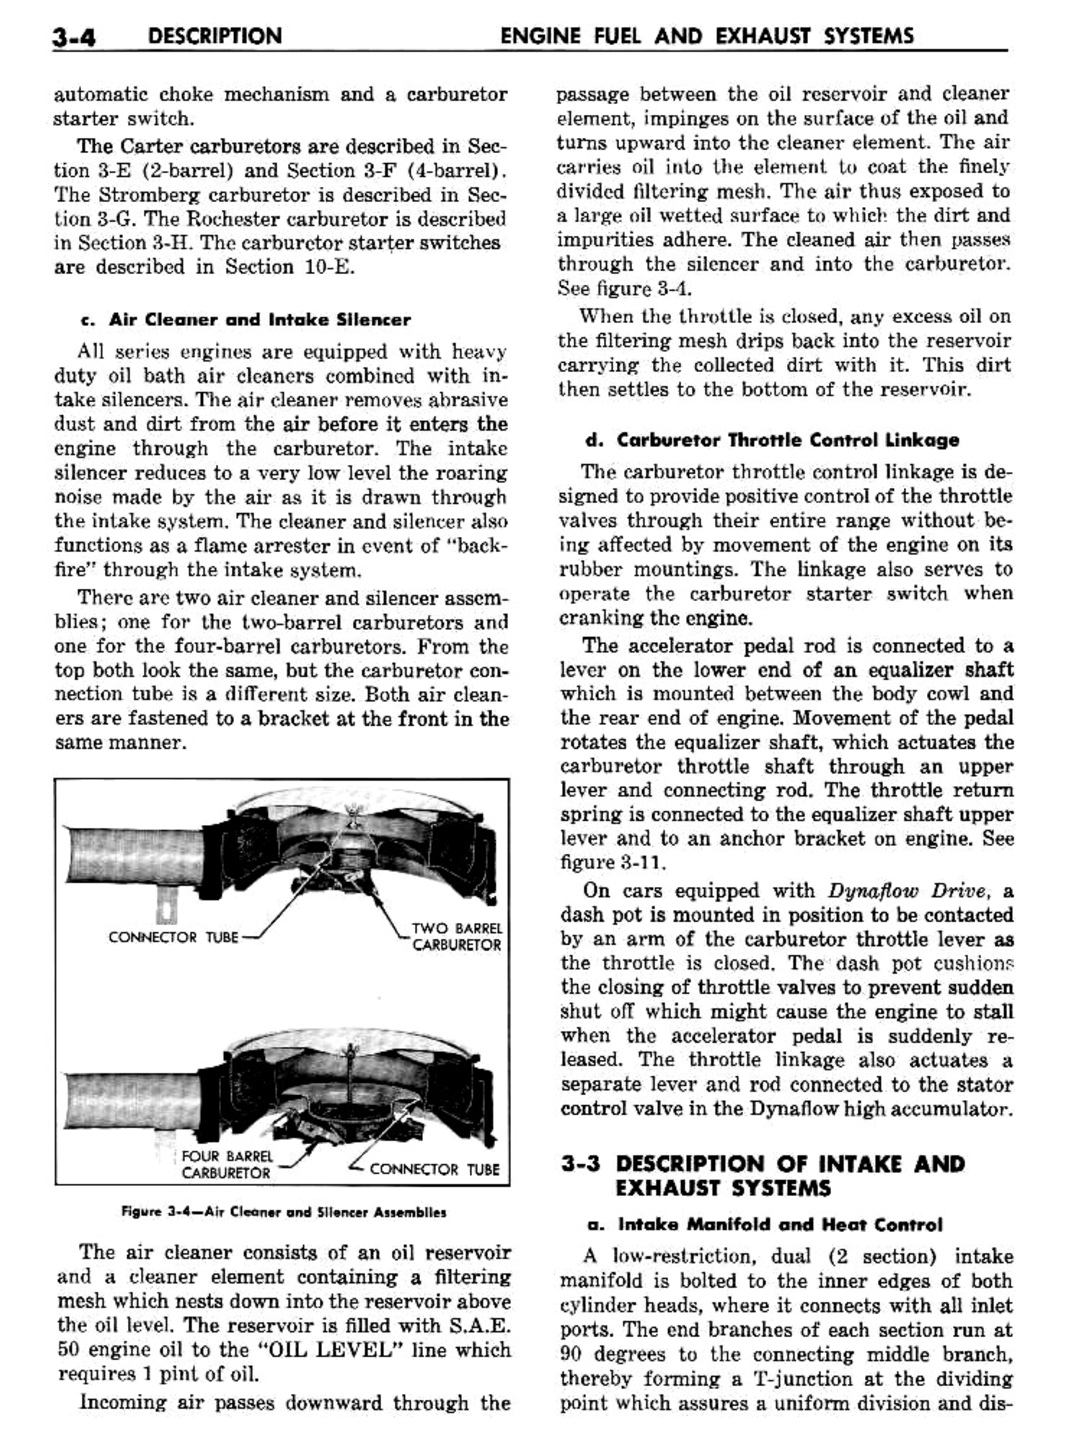 n_04 1957 Buick Shop Manual - Engine Fuel & Exhaust-004-004.jpg